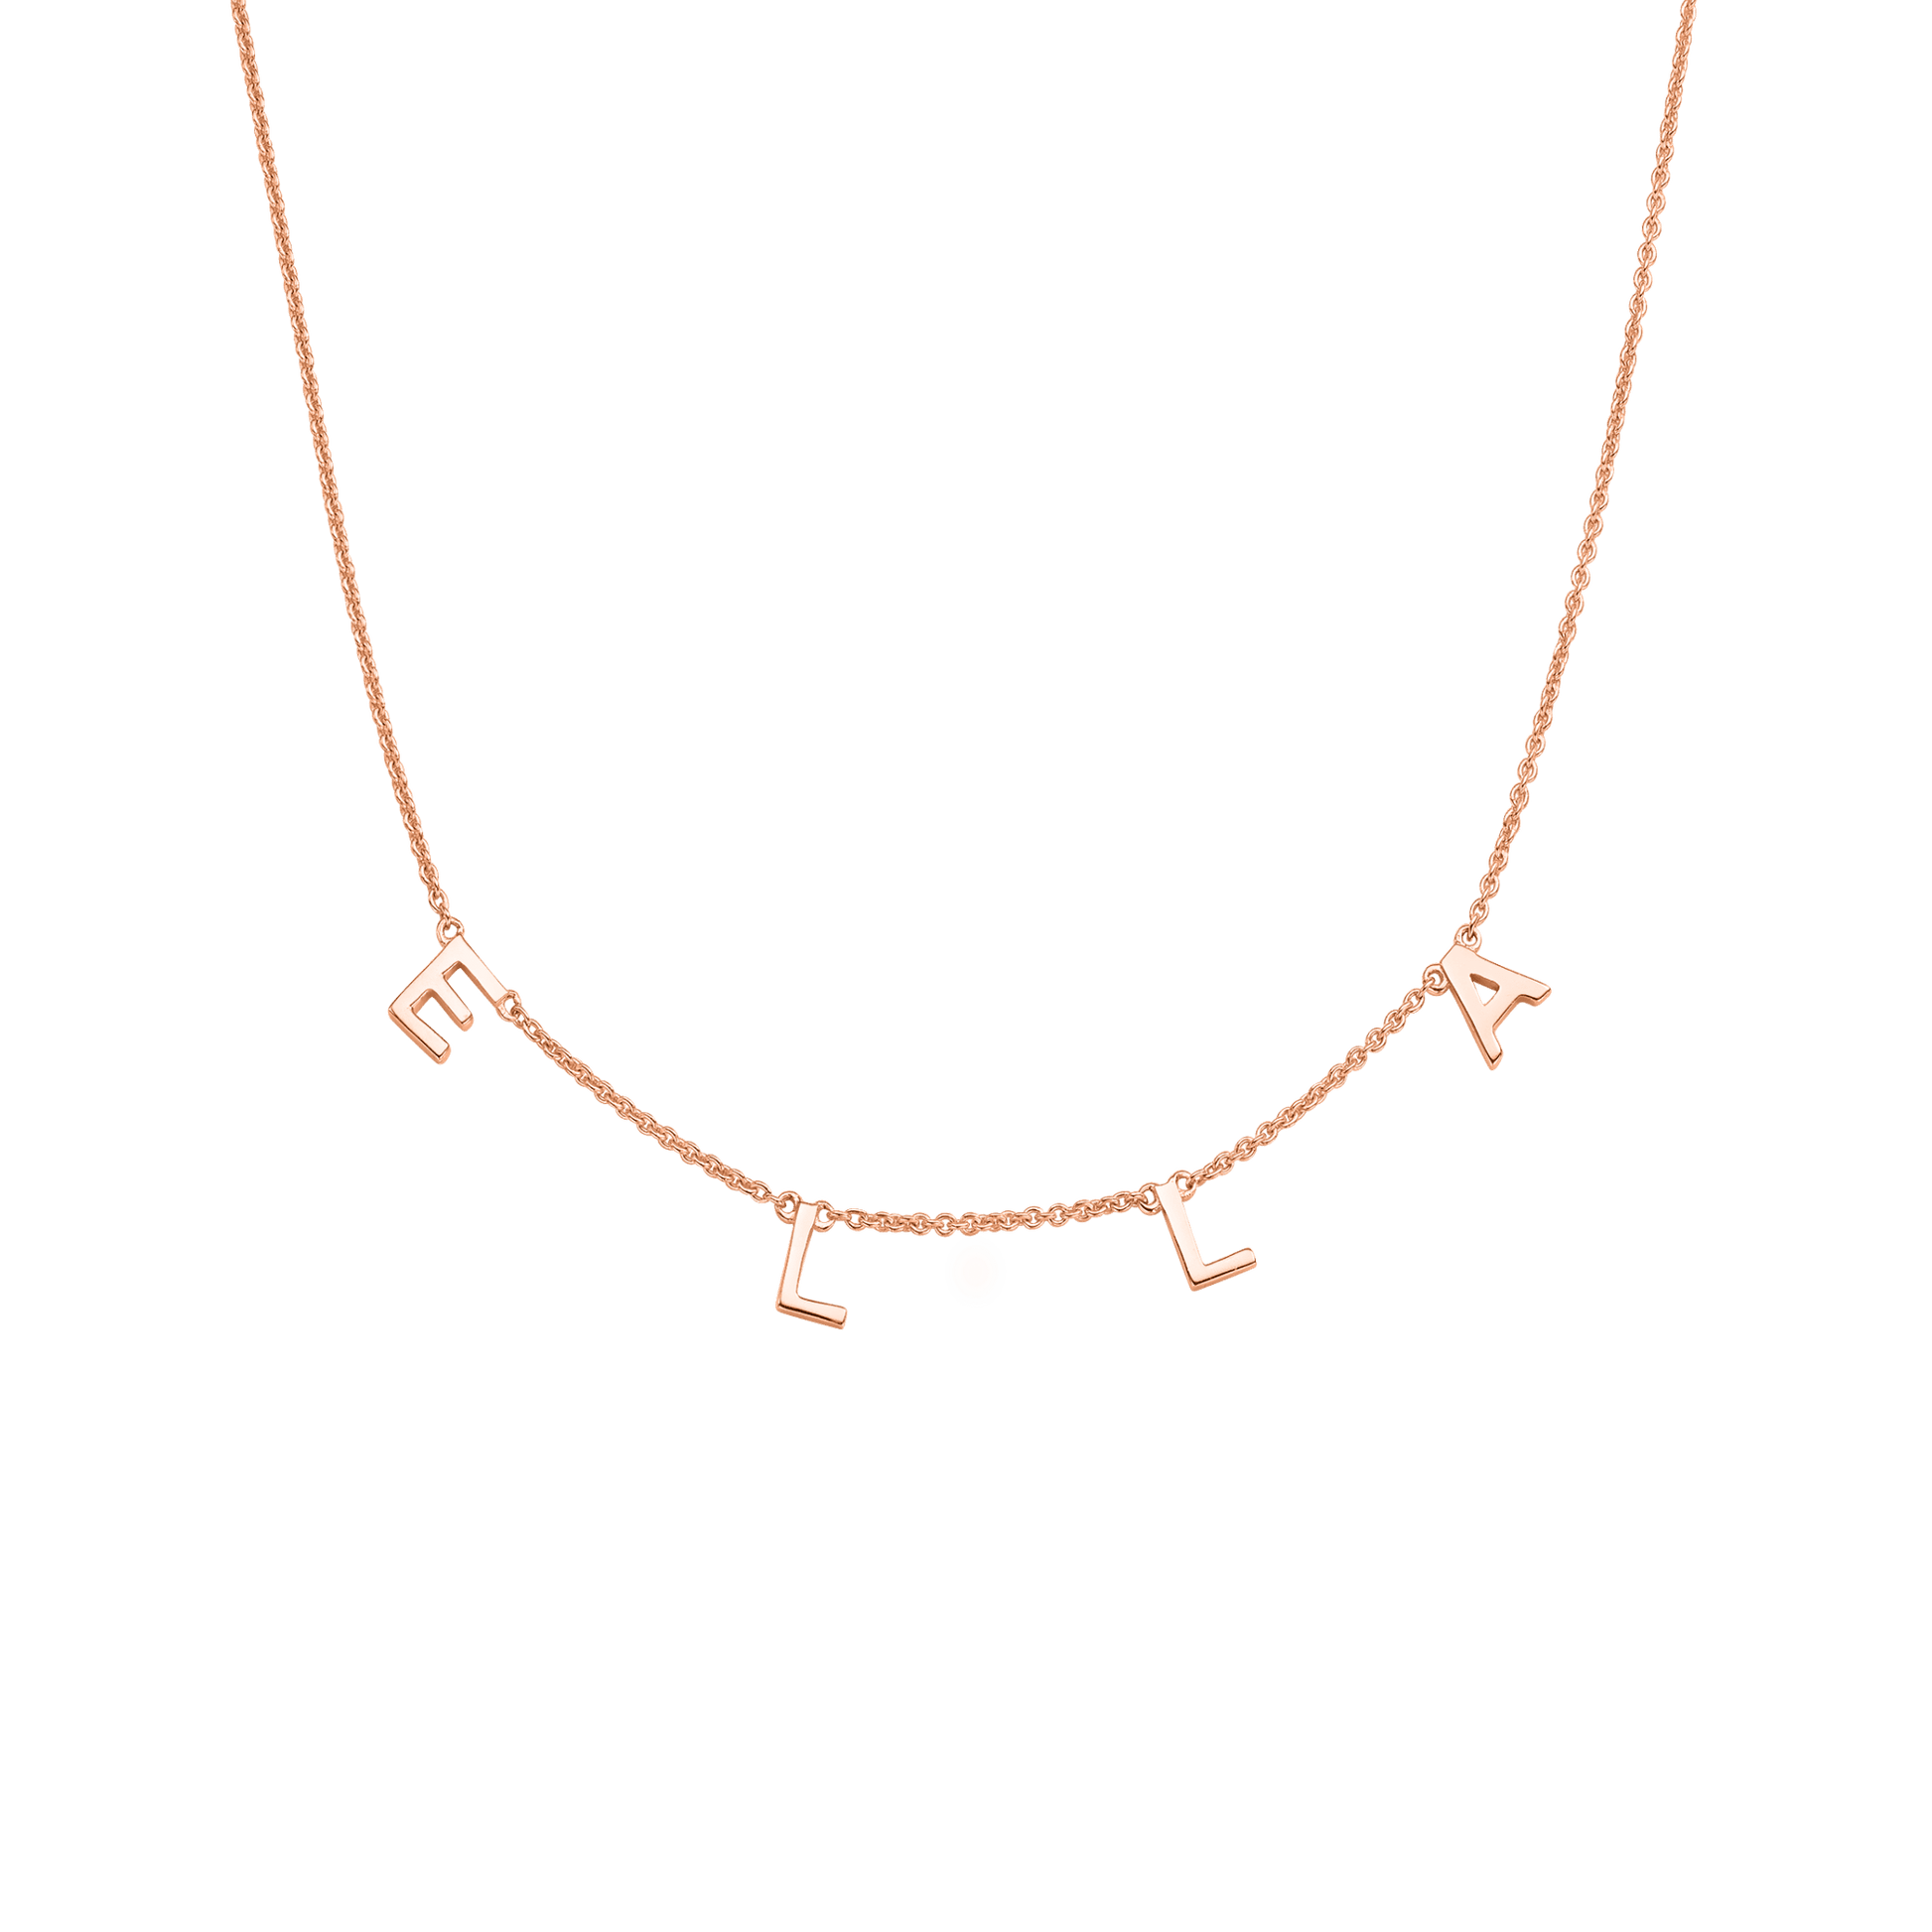 Name Necklace - 18K Rose Vermeil Necklaces magal-dev 1 Initial Adjustable 16-17" (40cm-43cm) 